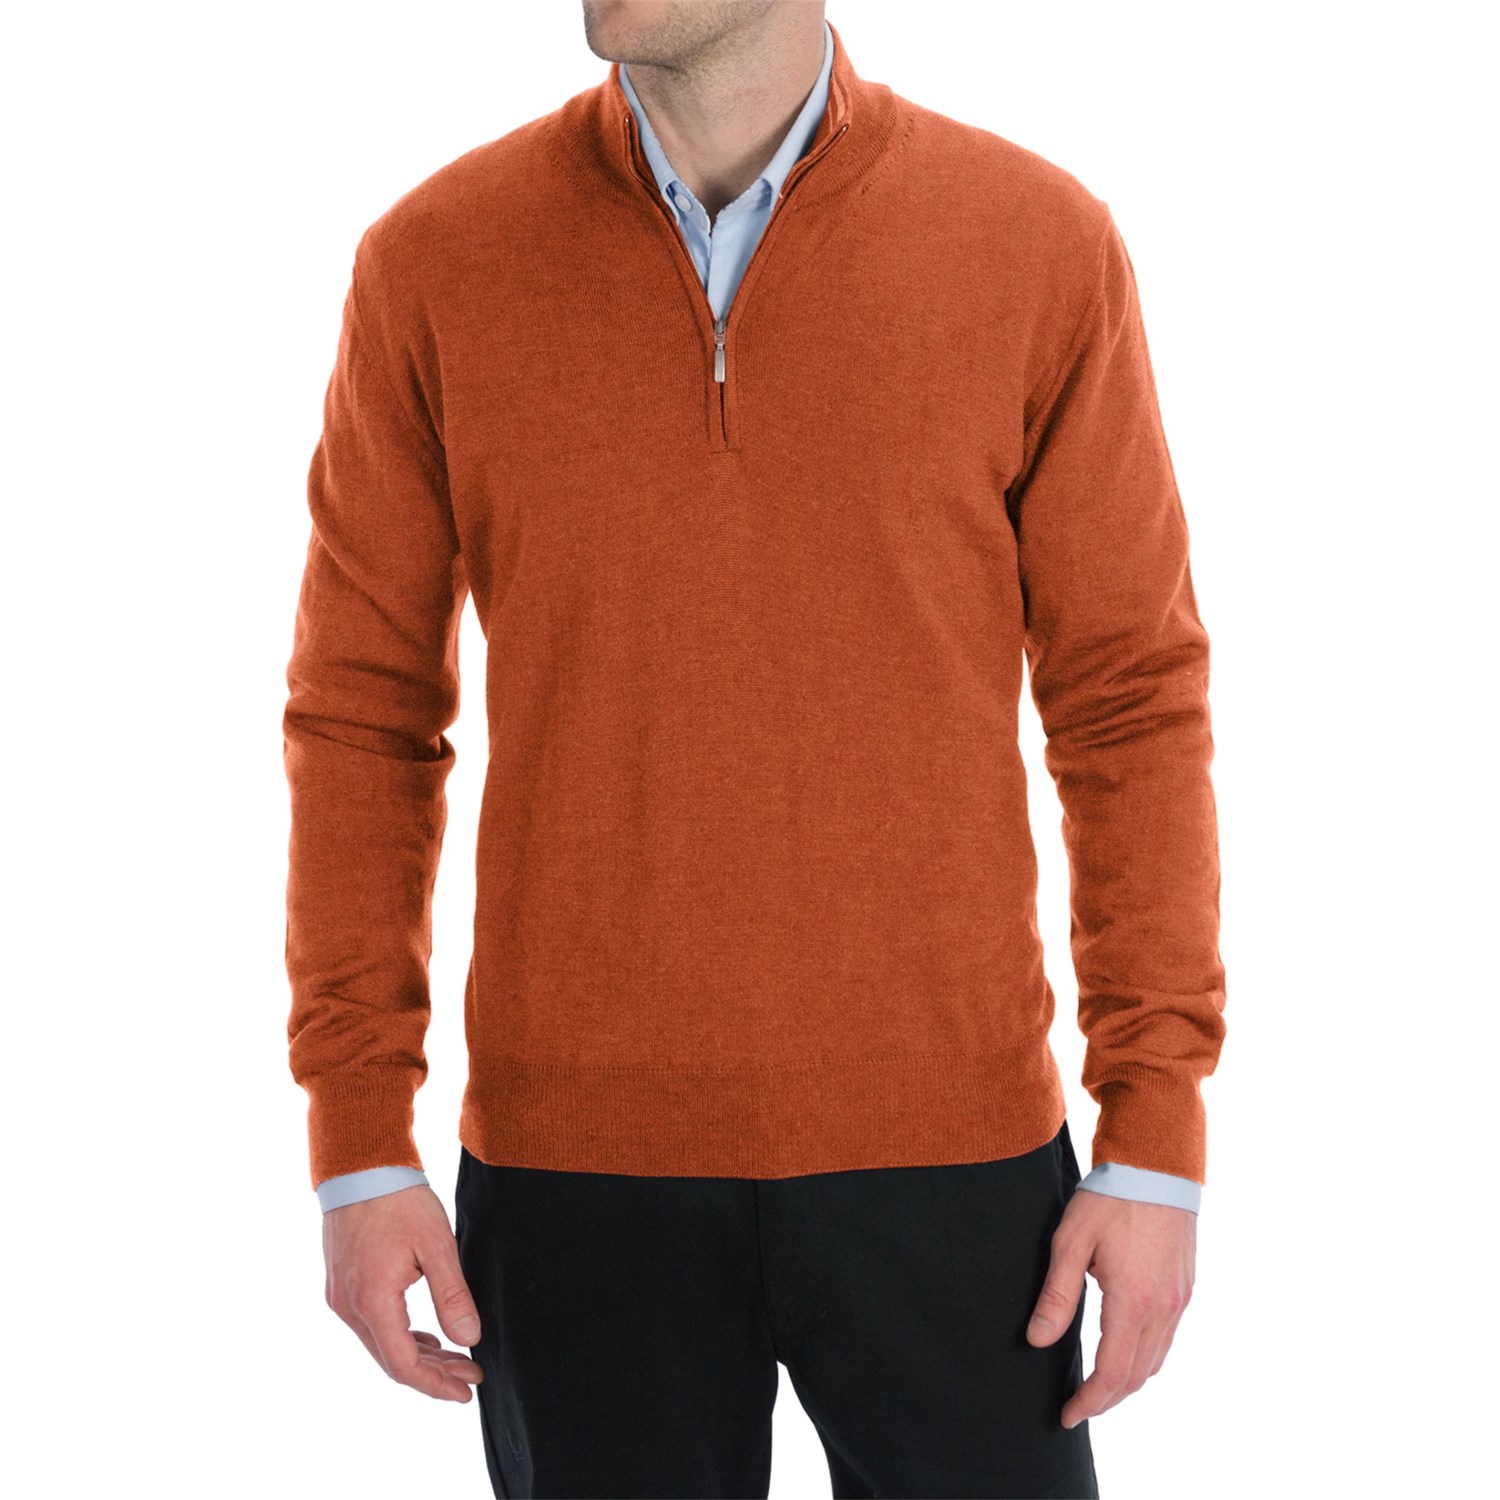 Toscano Zip Mock Neck Sweater (For Men) - Save 78%